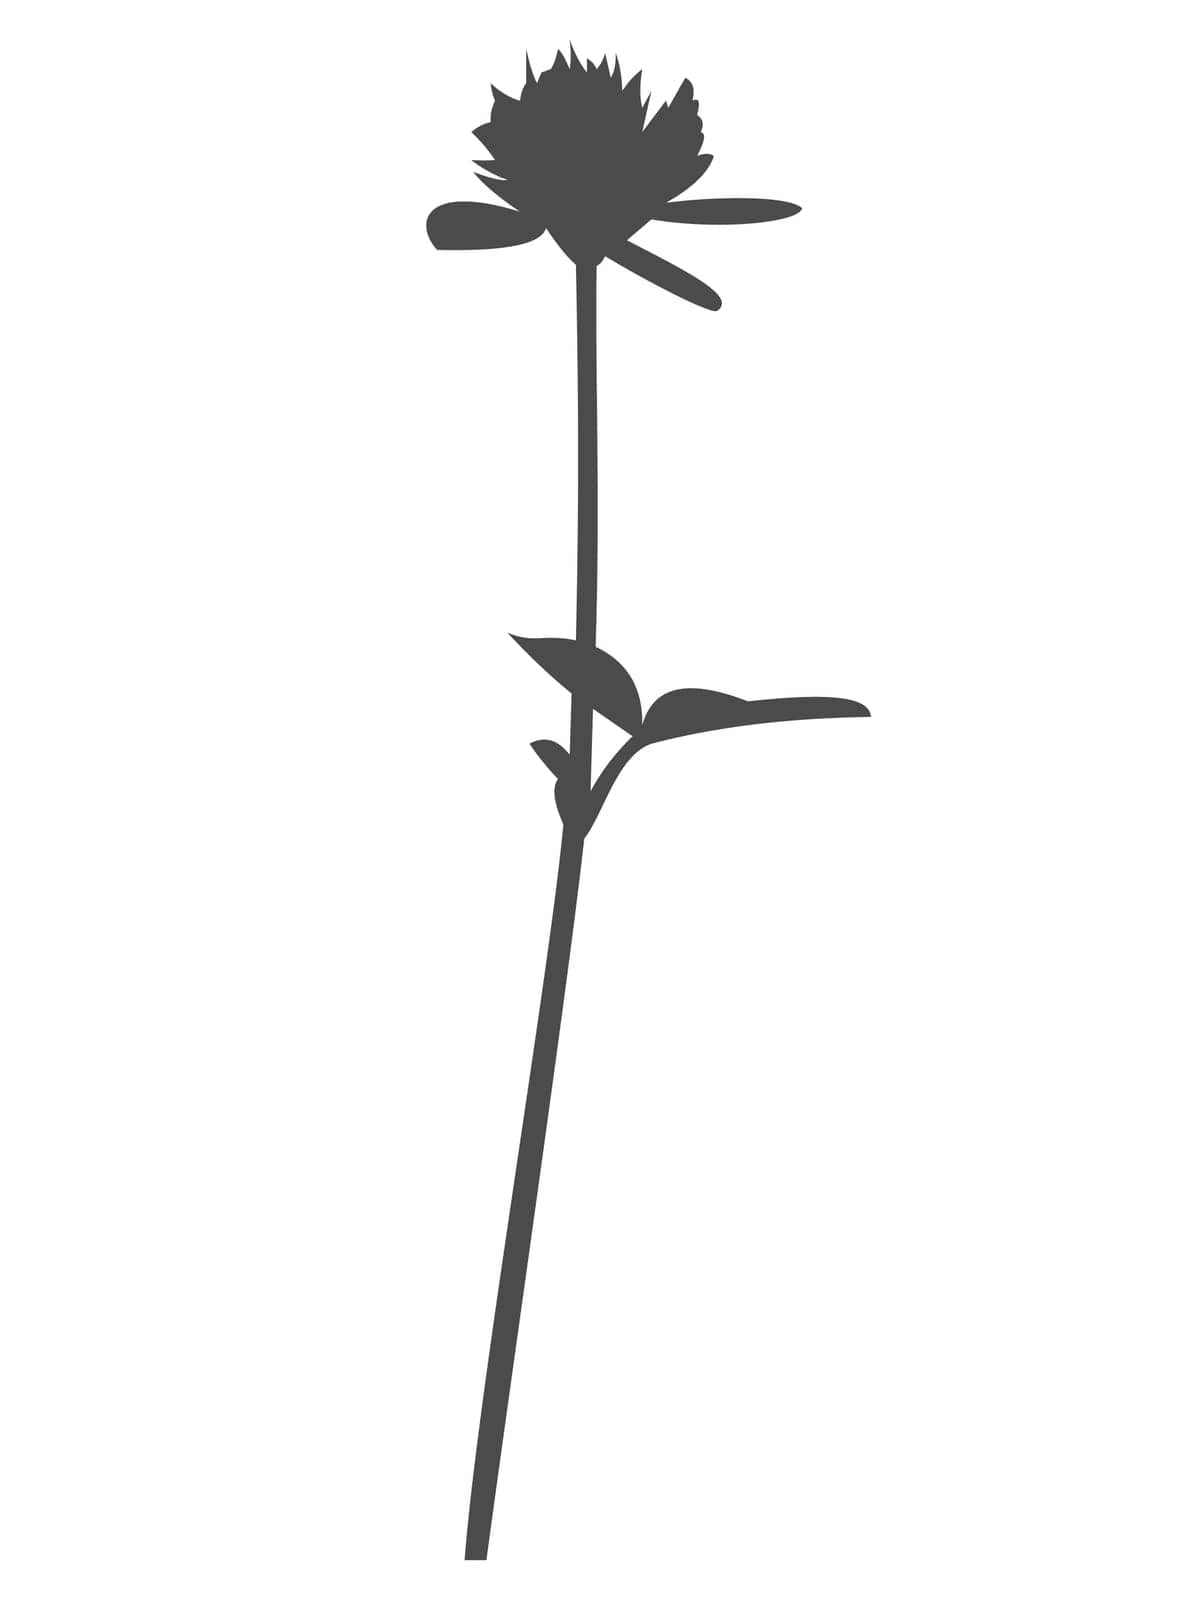 Wildflower in dark grey by manudoodle